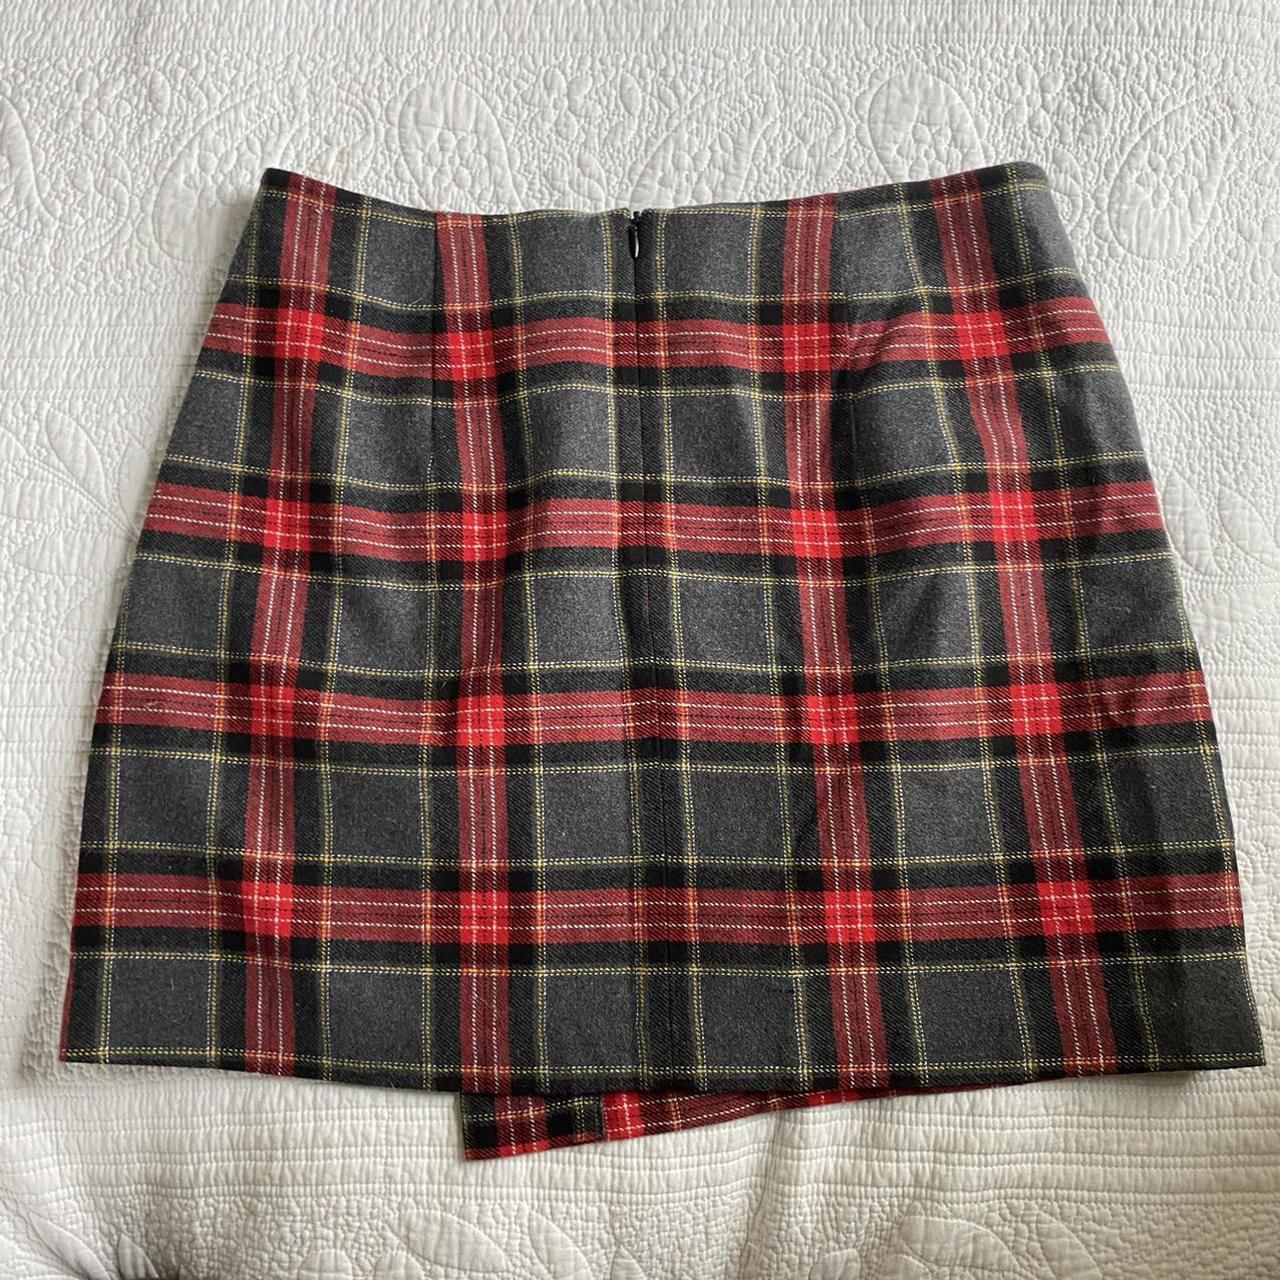 Product Image 3 - H&M Plaid Mini Skirt

Wrap style